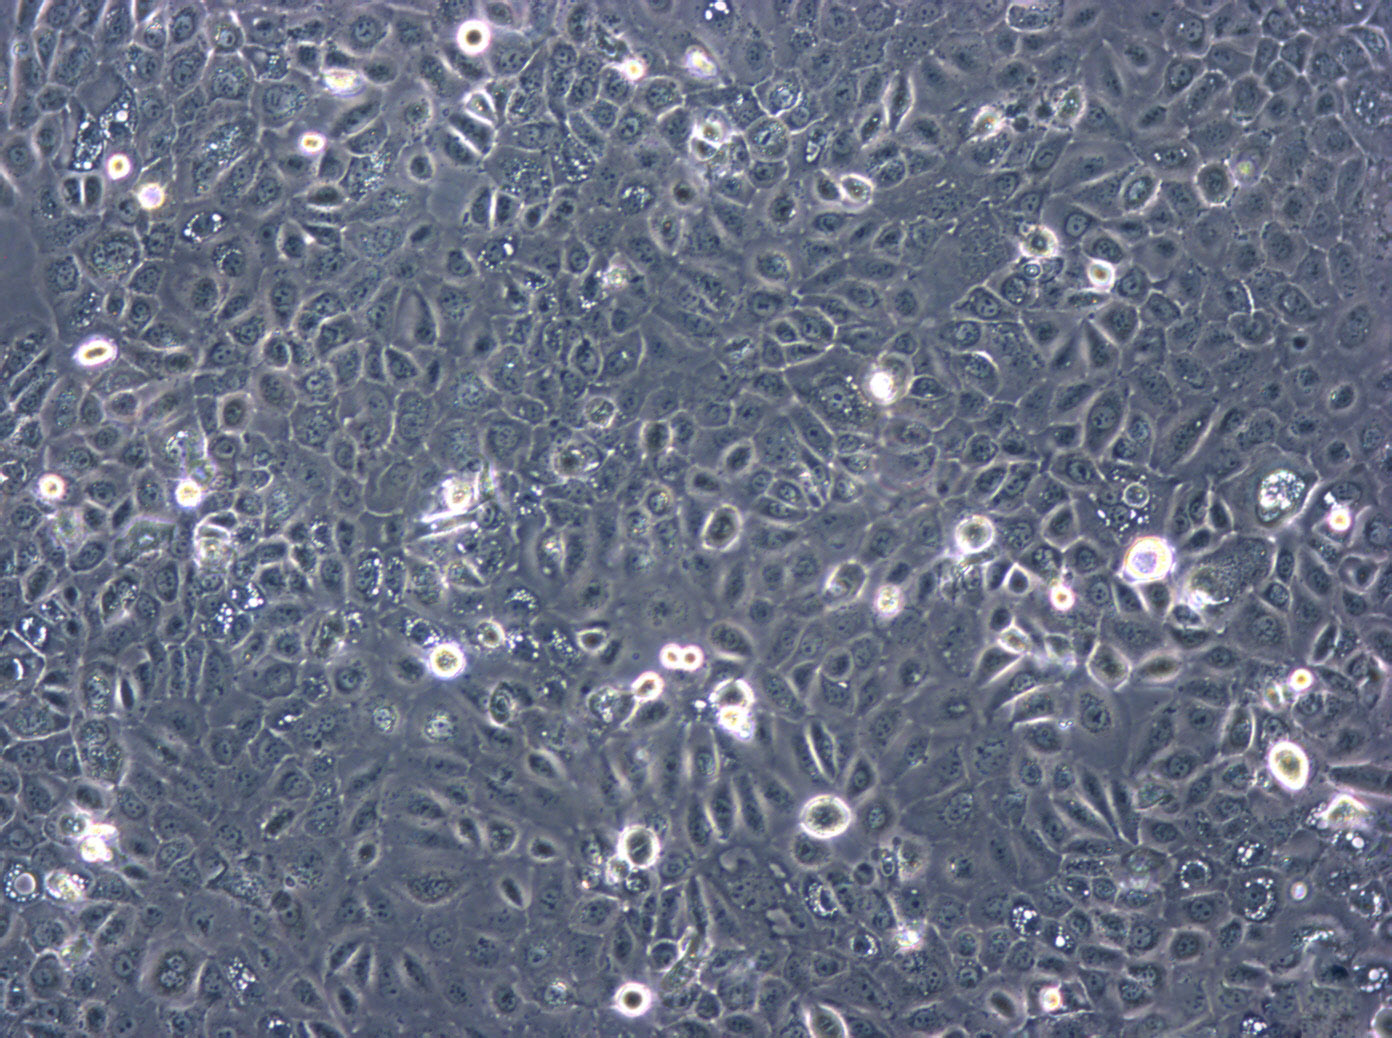 HK-2 [Human kidney] epithelioid cells人肾小管上皮细胞系